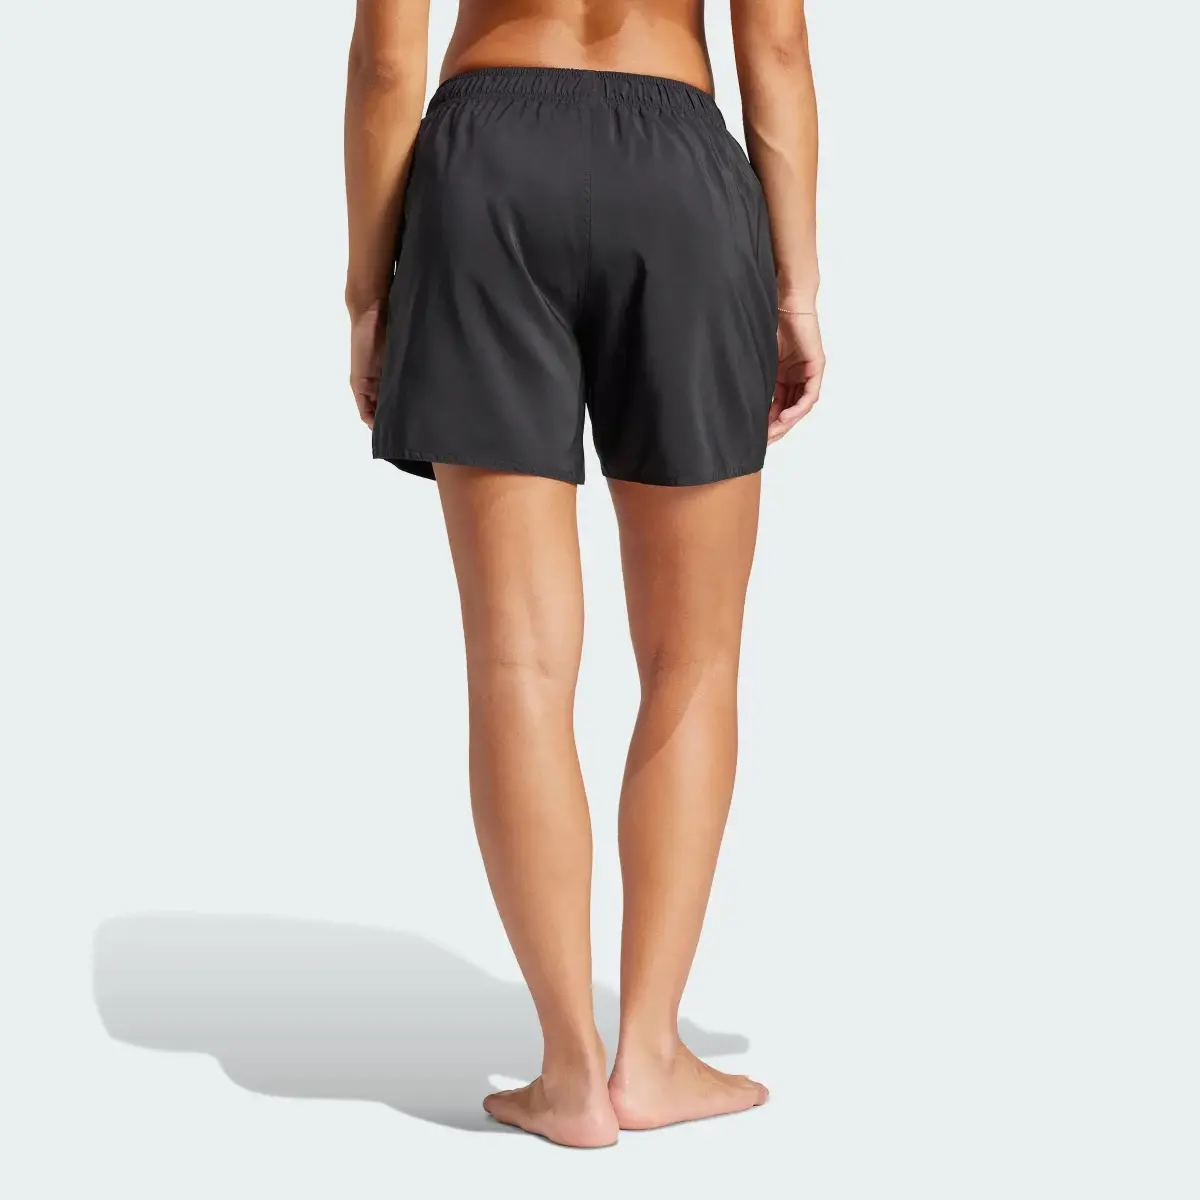 Adidas Branded Beach Shorts. 2